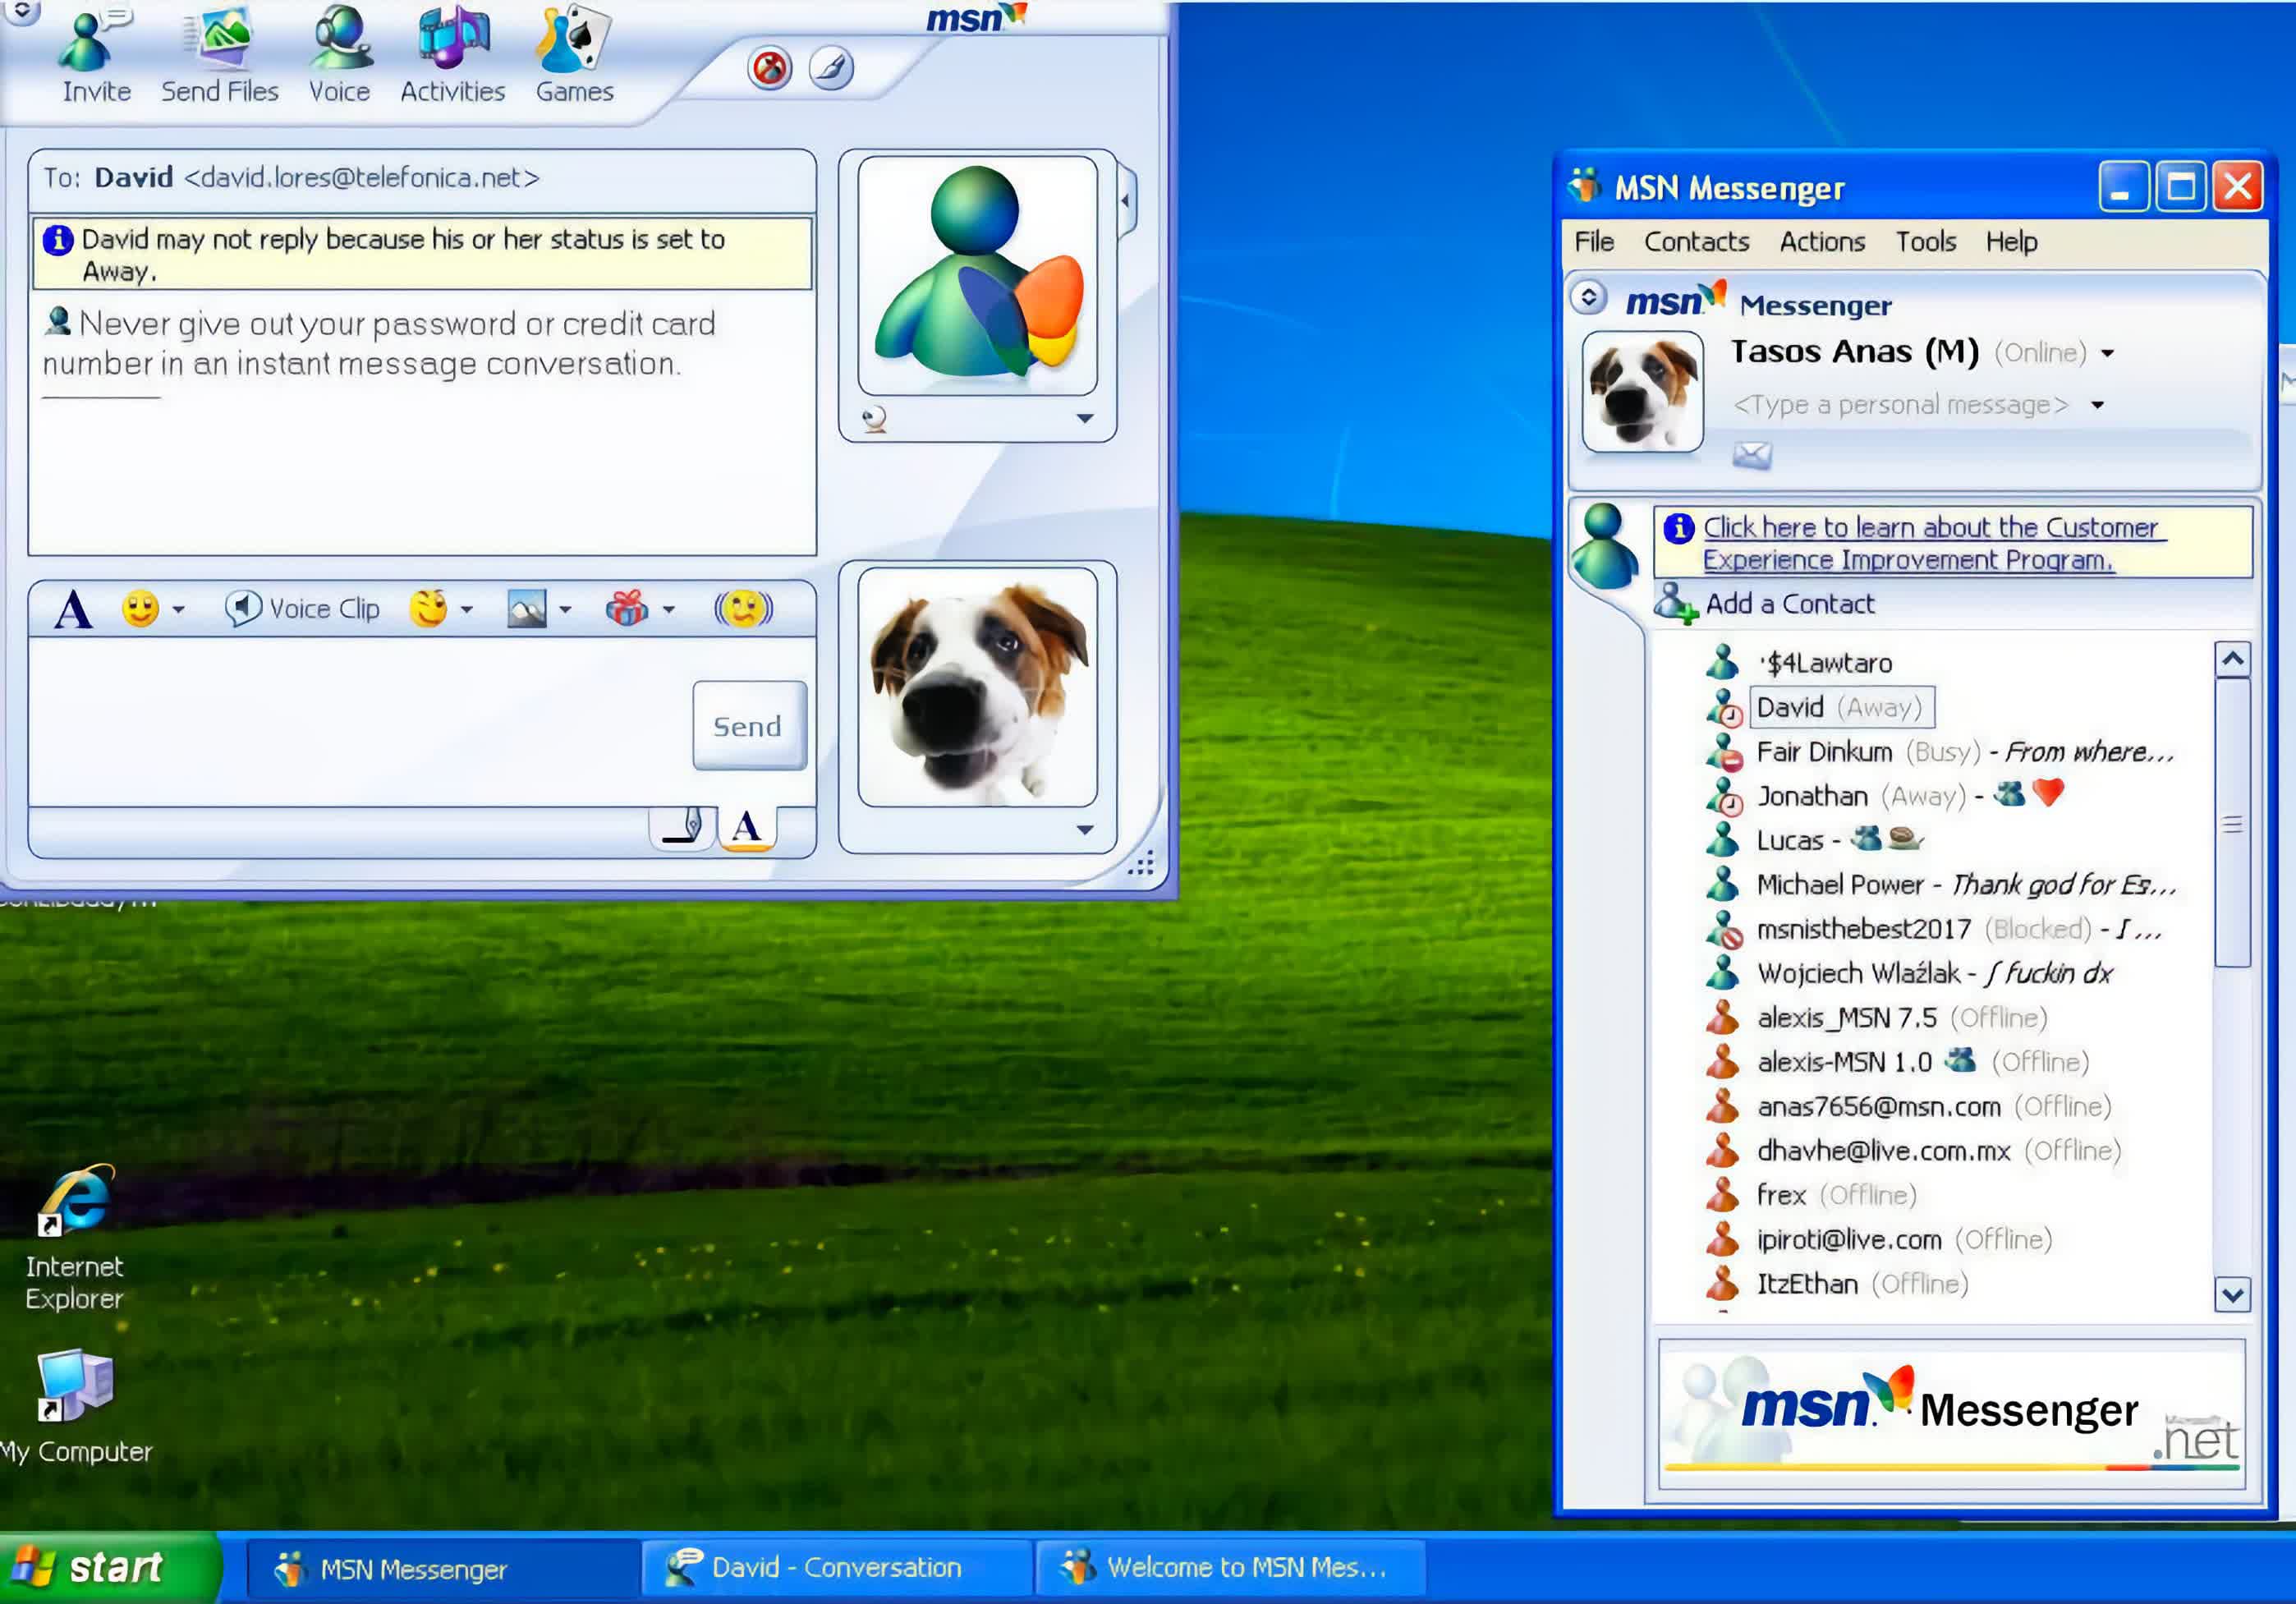 Retro Tech Dreams on X: MSN Gaming Zone  / X